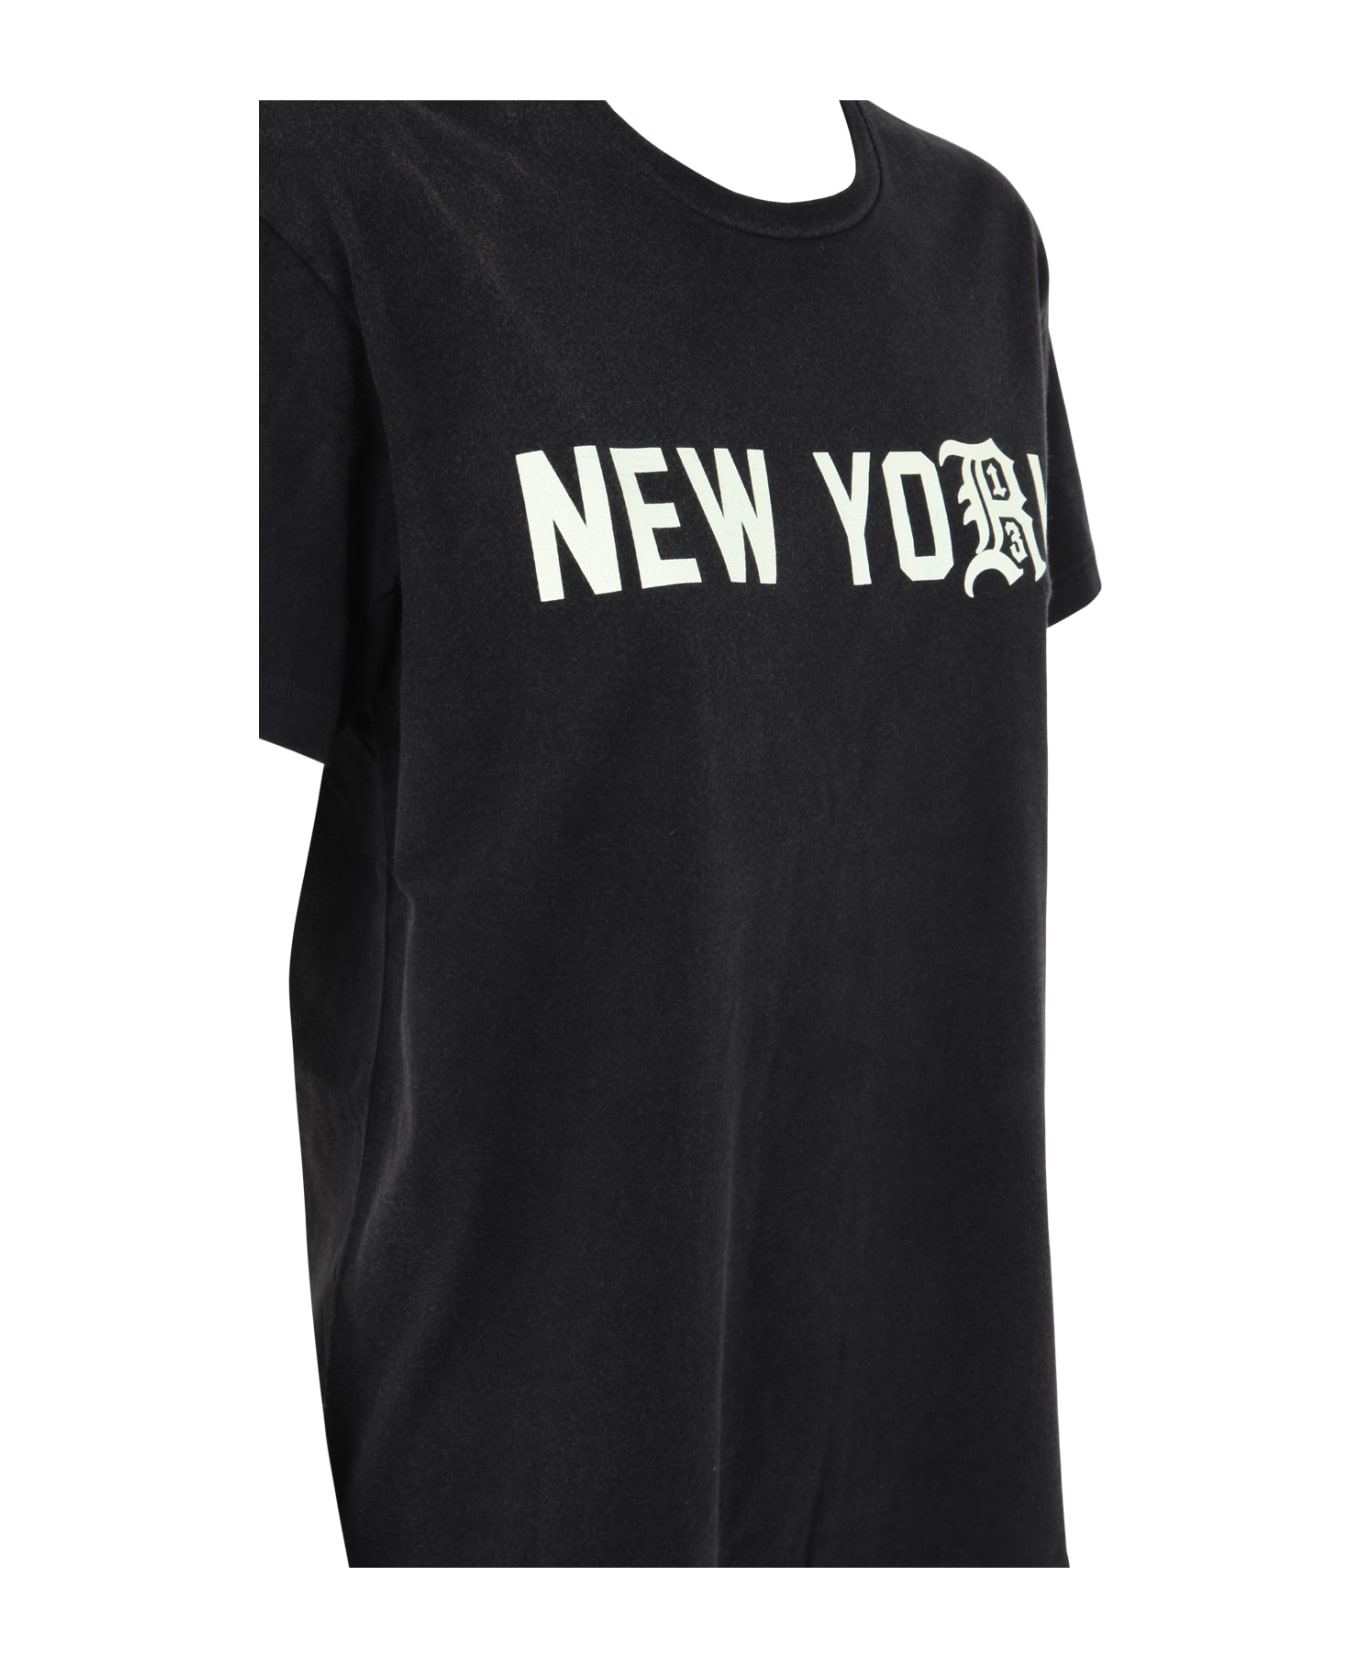 R13 New York Boy T-shirt - A Black